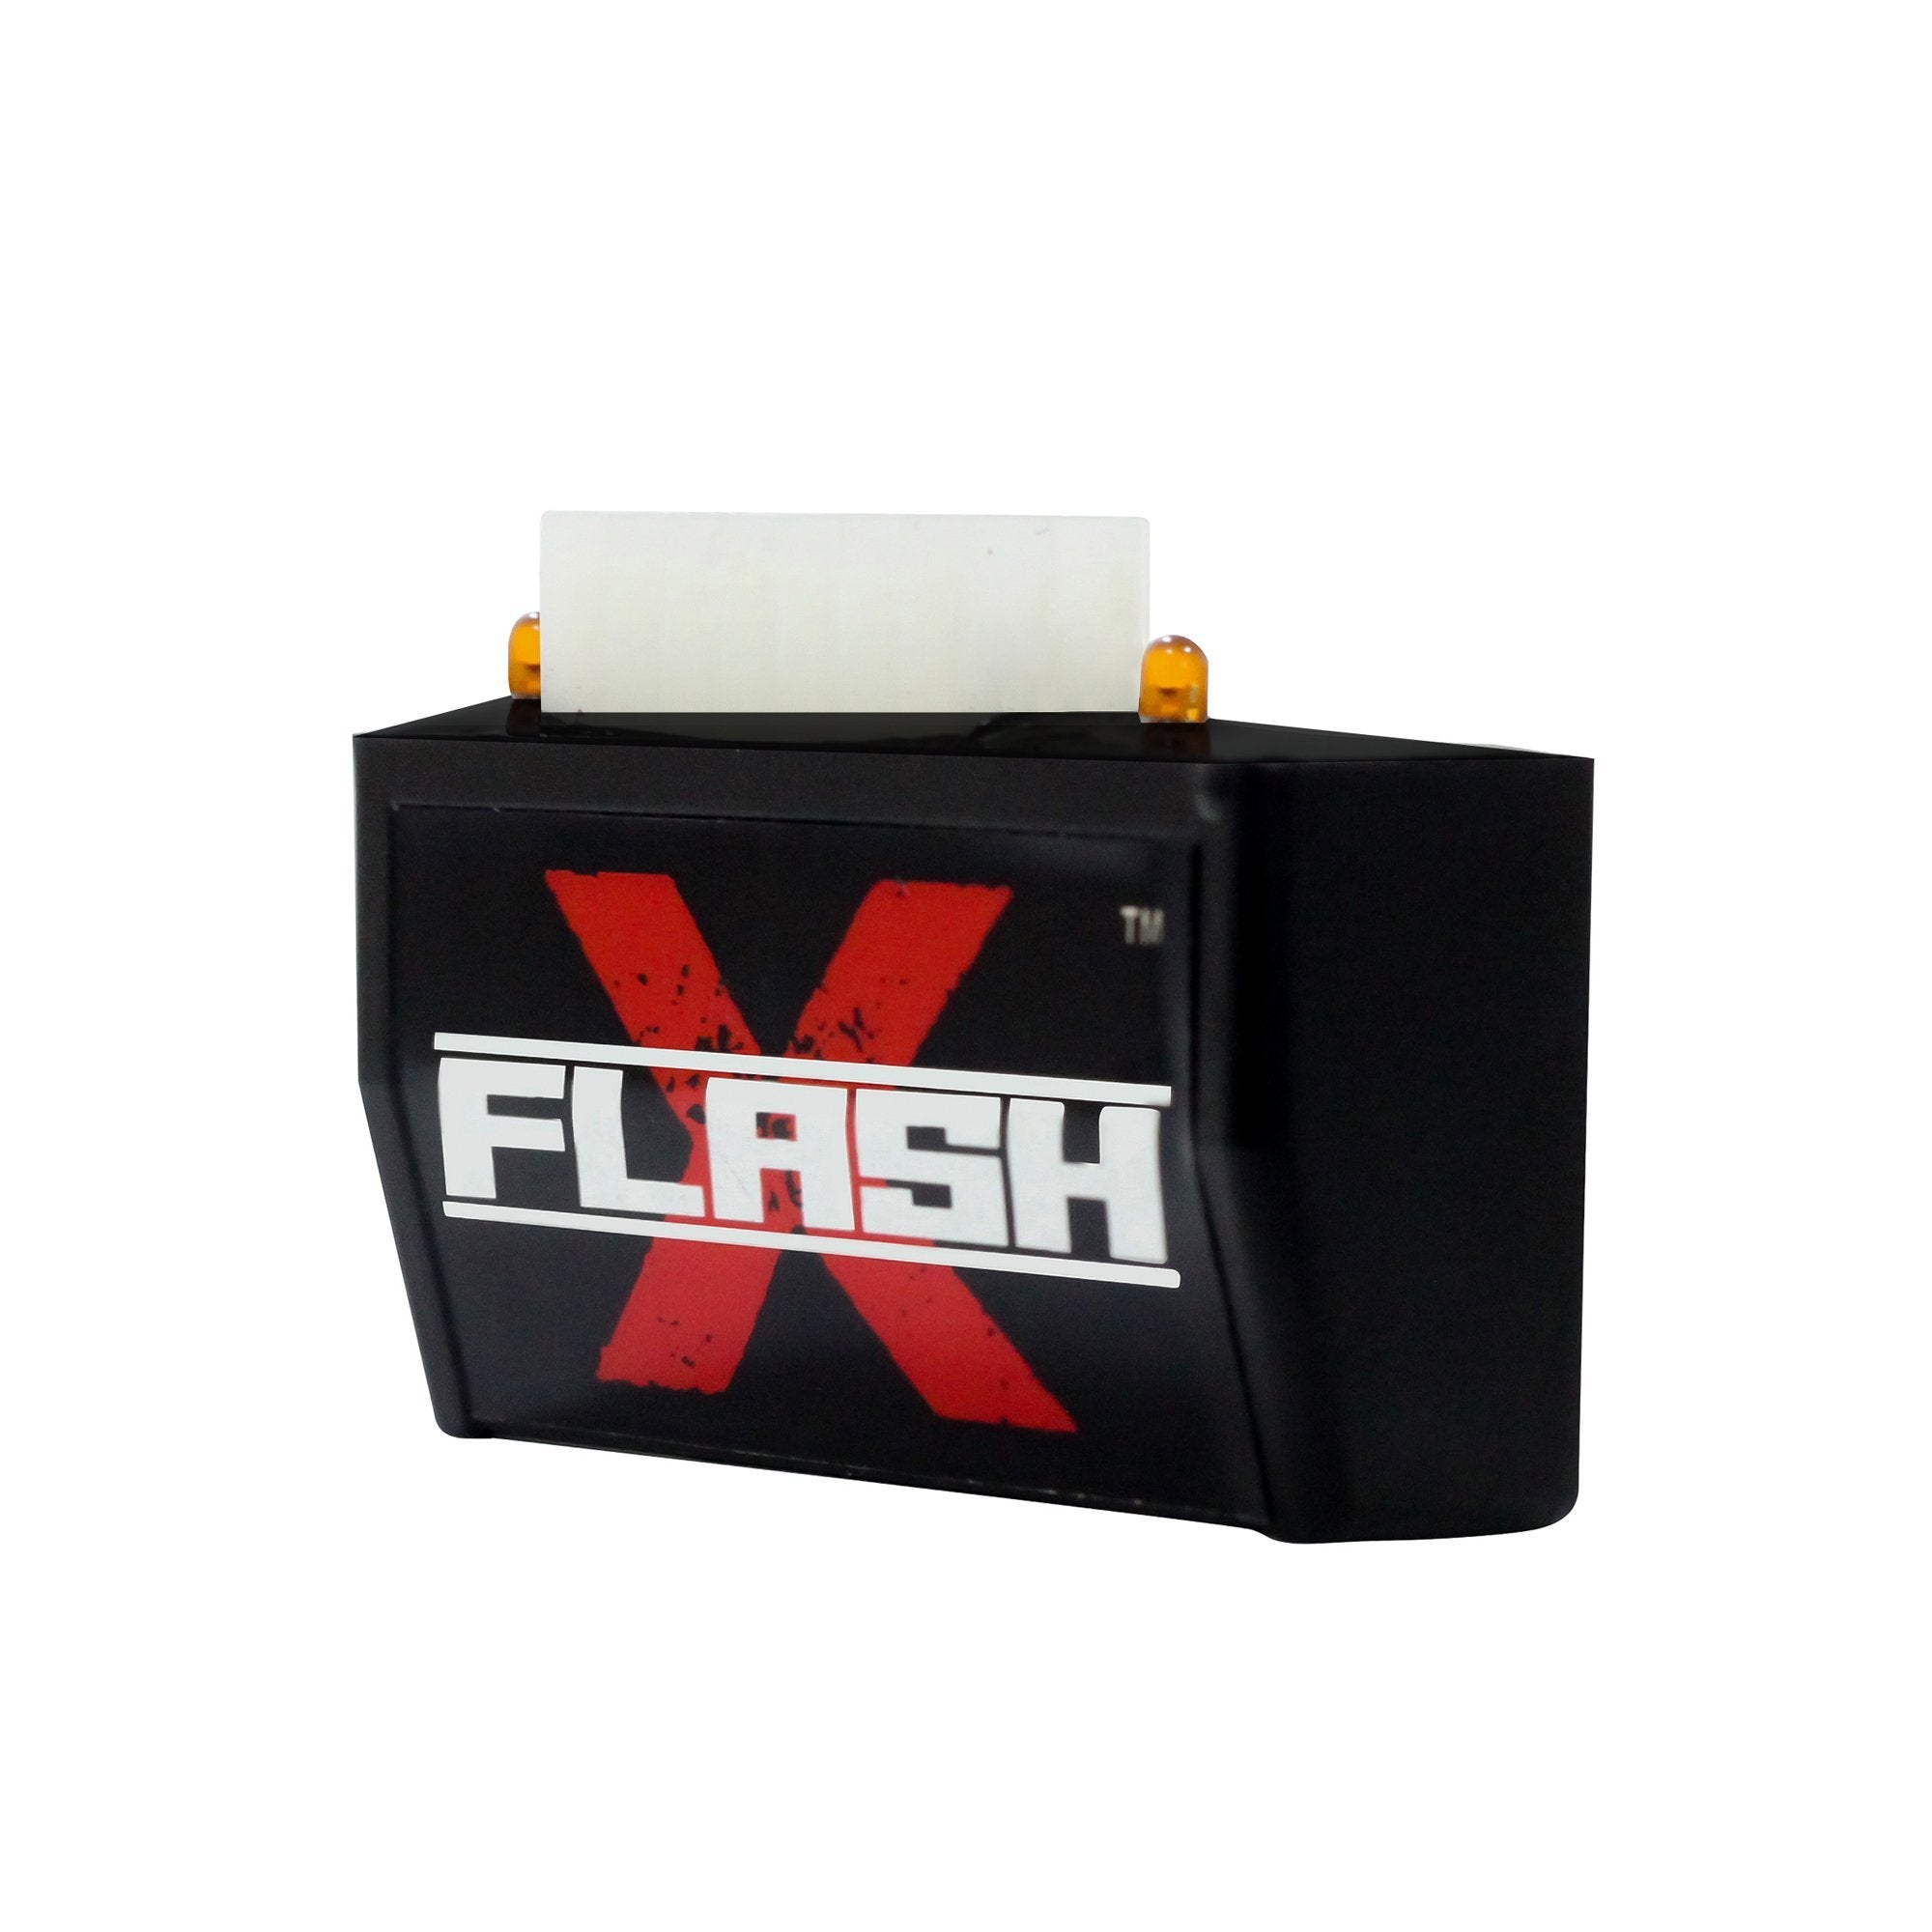 FlashX Hazard Flash Module, Blinker/Flasher for Royal Enfield Himalayan - LRL Motors